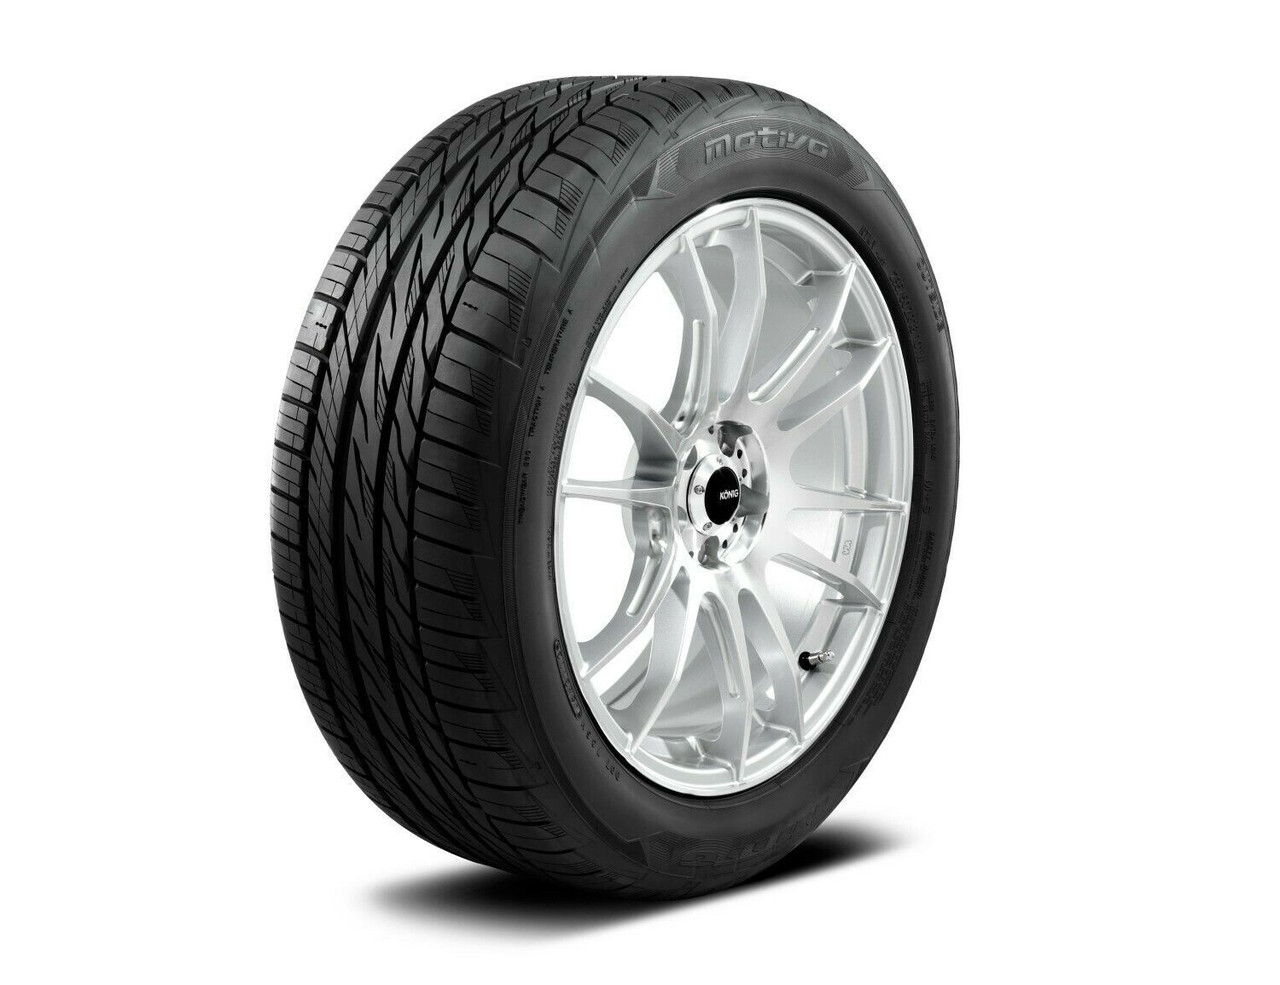 225/45ZR17 Nitto Motivo All Season High Performance Tire 94W 25.0 2254517